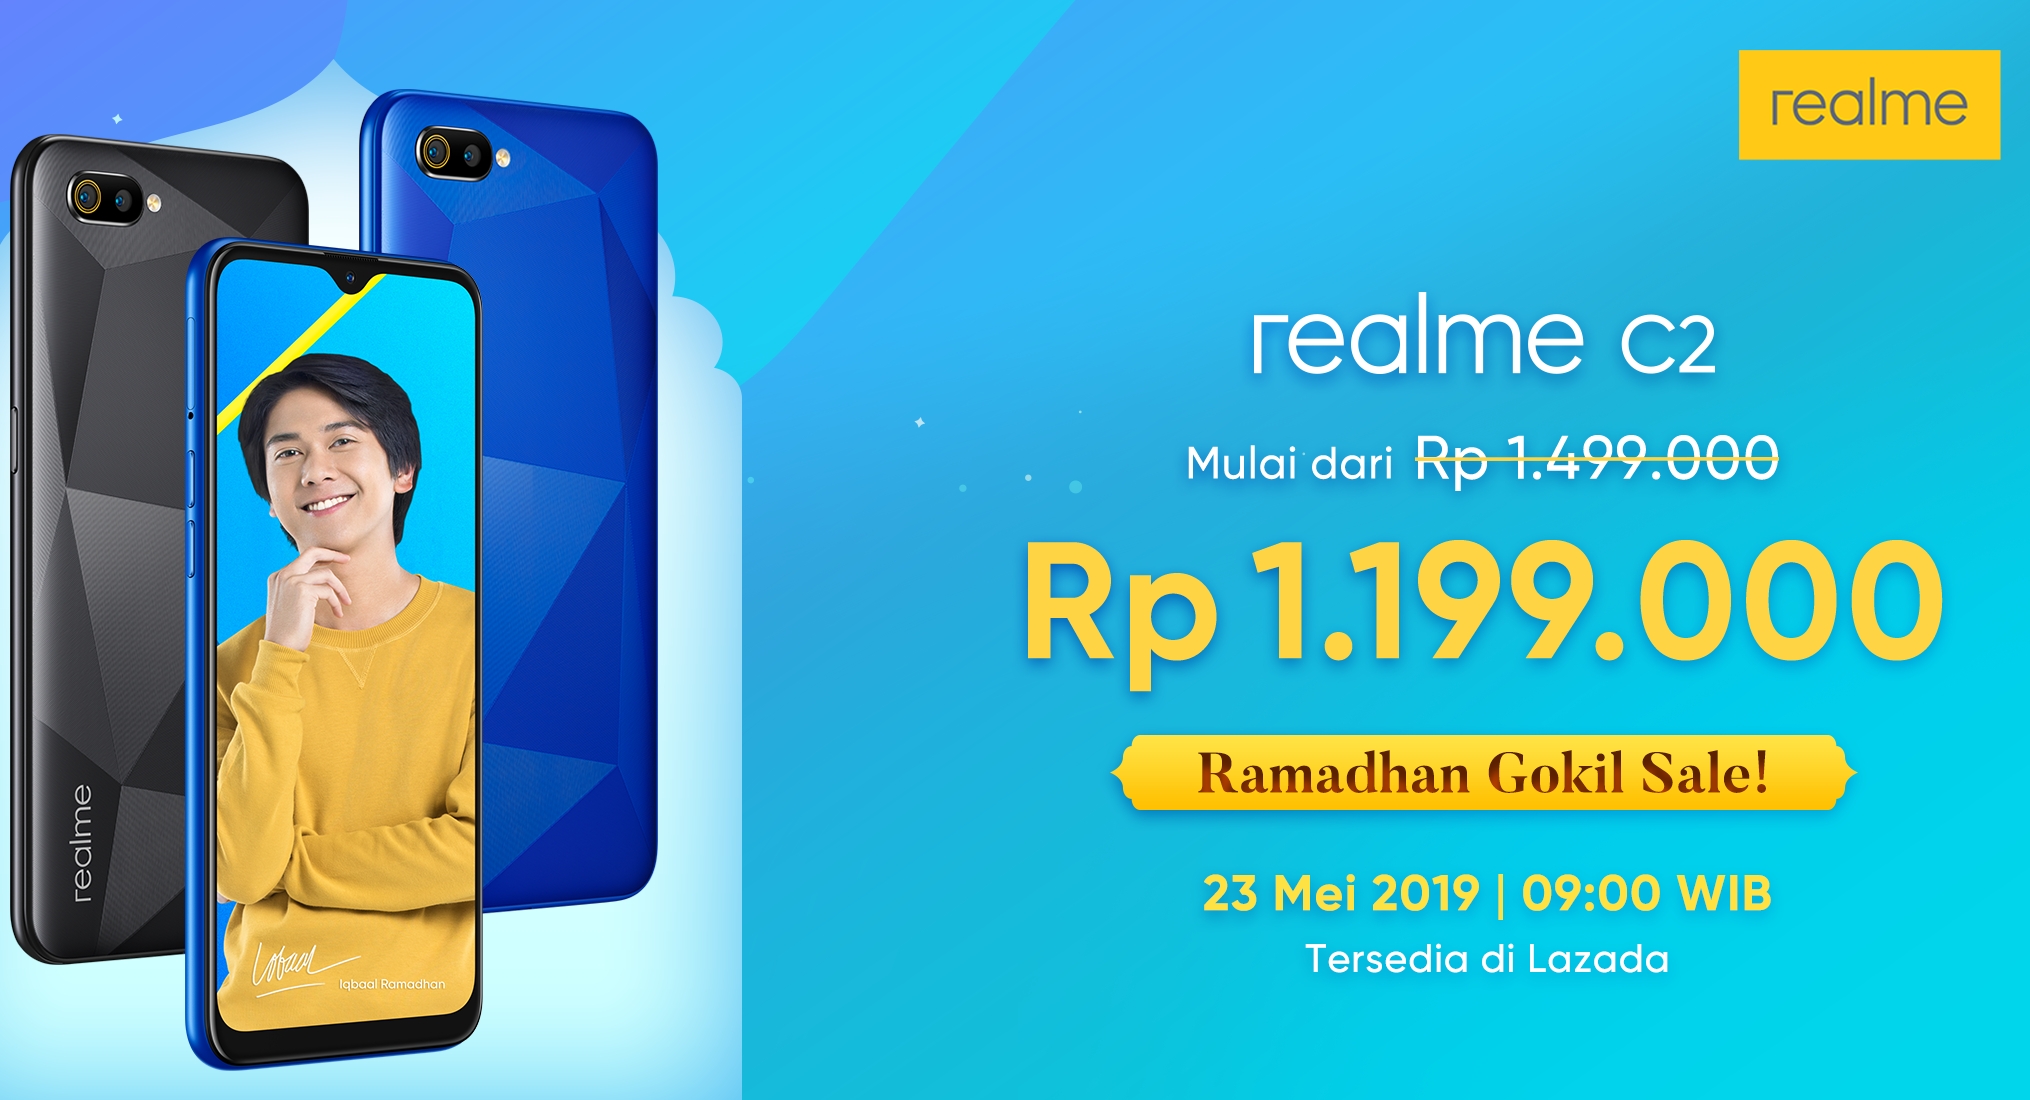 Realme memberikan penawaran khusus yang terbaik di Bulan Ramadan untuk realme C2 melalui program Ramadan Gokil Sale. 